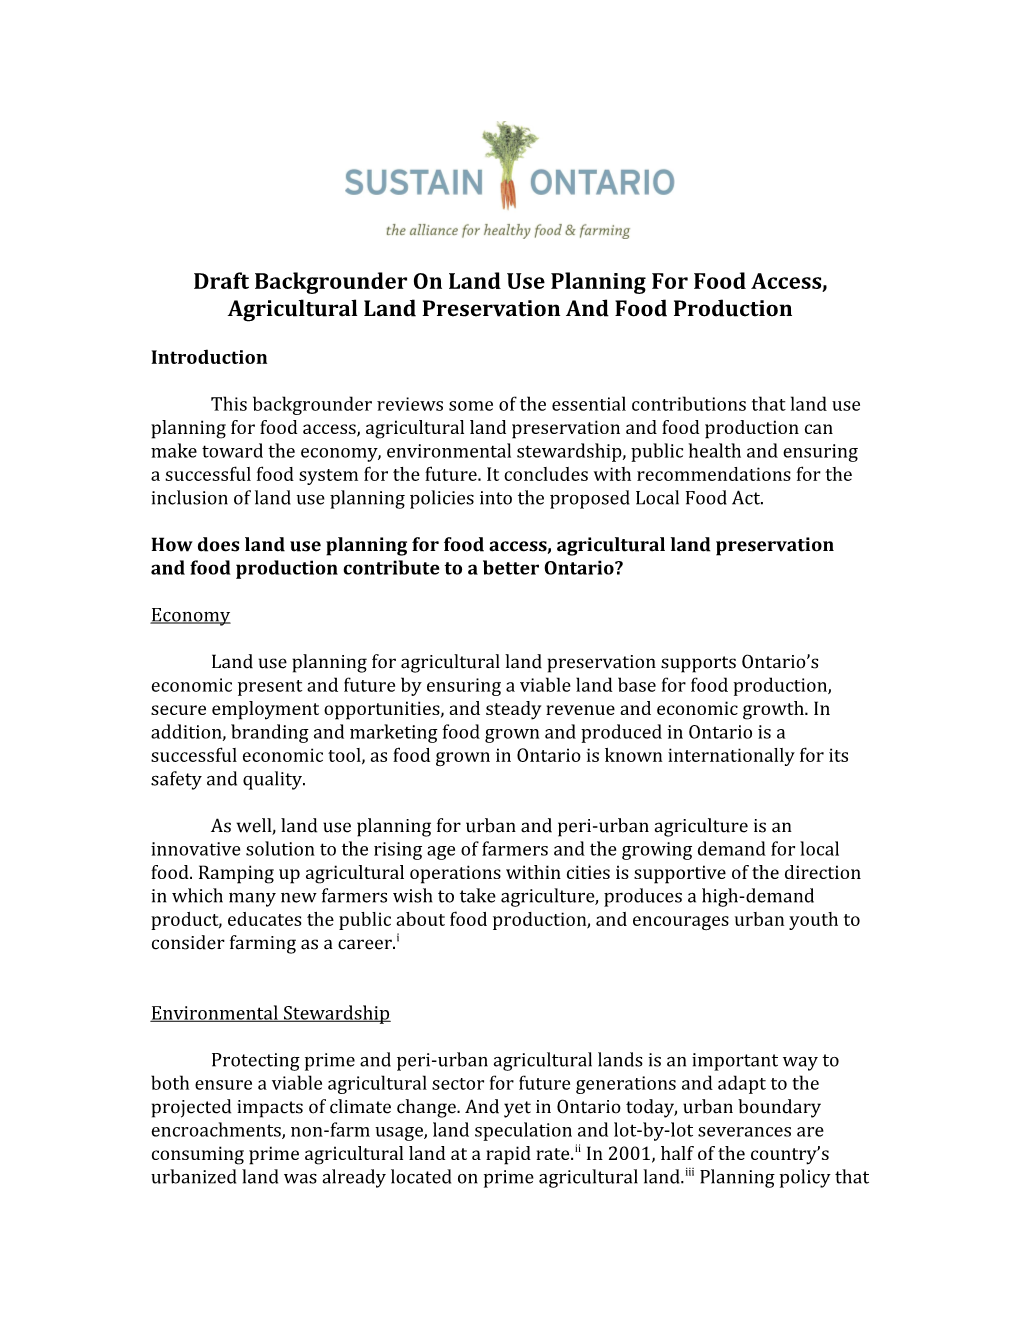 Draft Backgrounder on Land Use Planning for Food Access, Agricultural Land Preservation